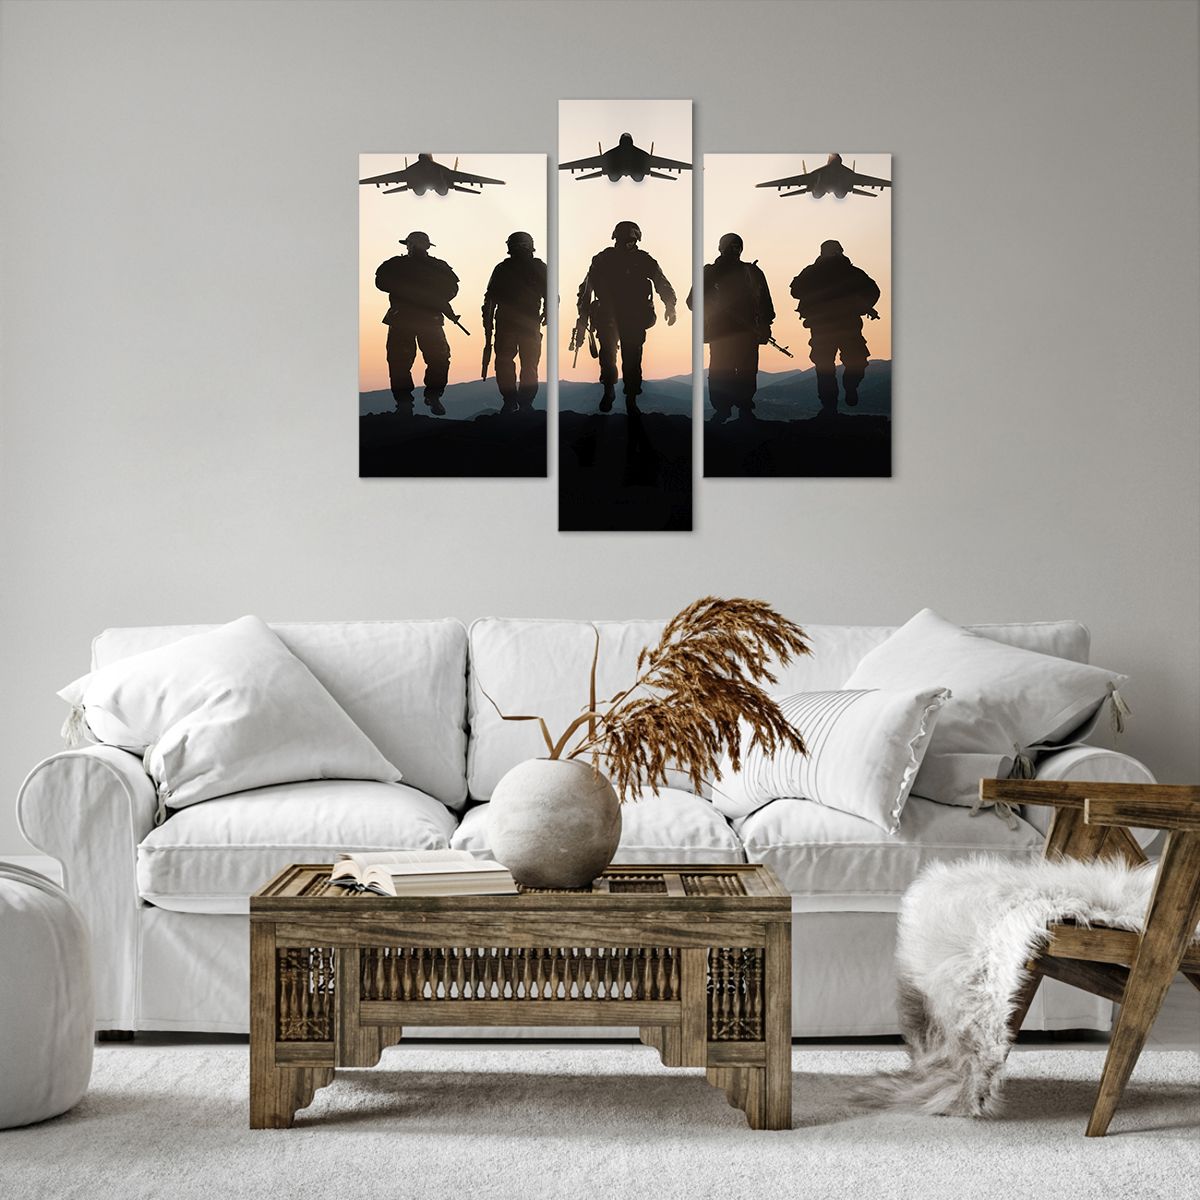 Cuadro sobre lienzo Militar, Cuadro sobre lienzo Ejército, Cuadro sobre lienzo Soldados, Cuadro sobre lienzo Avión Militar, Cuadro sobre lienzo Ejército